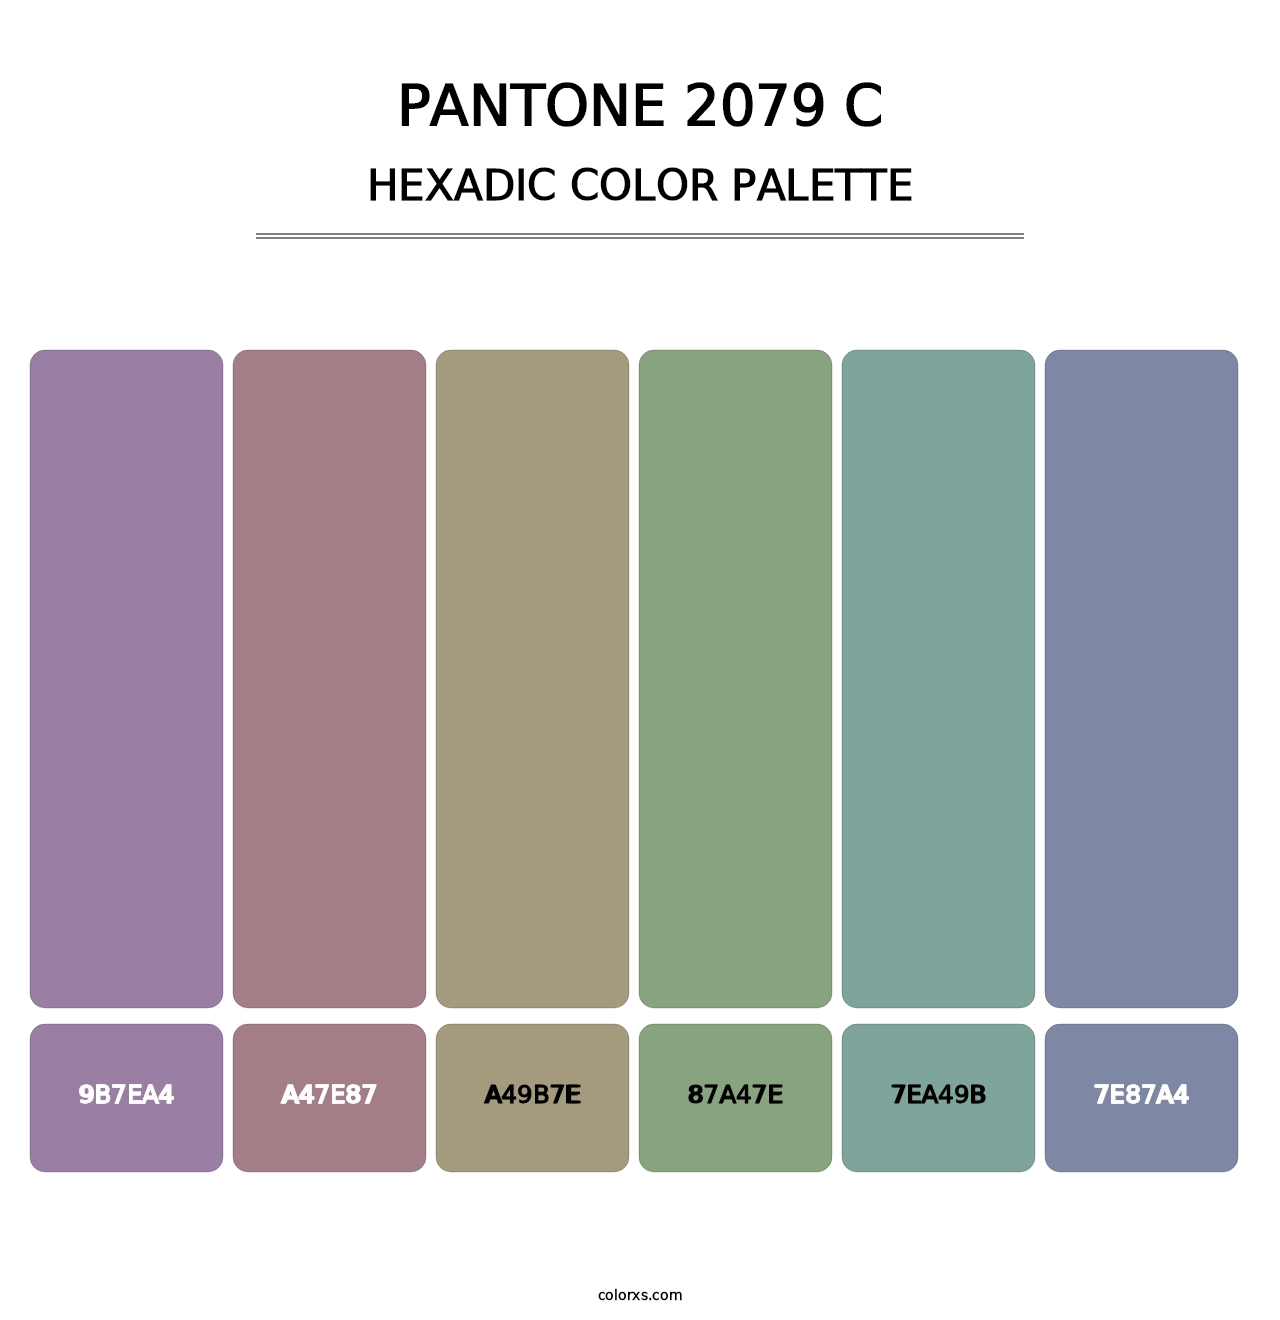 PANTONE 2079 C - Hexadic Color Palette